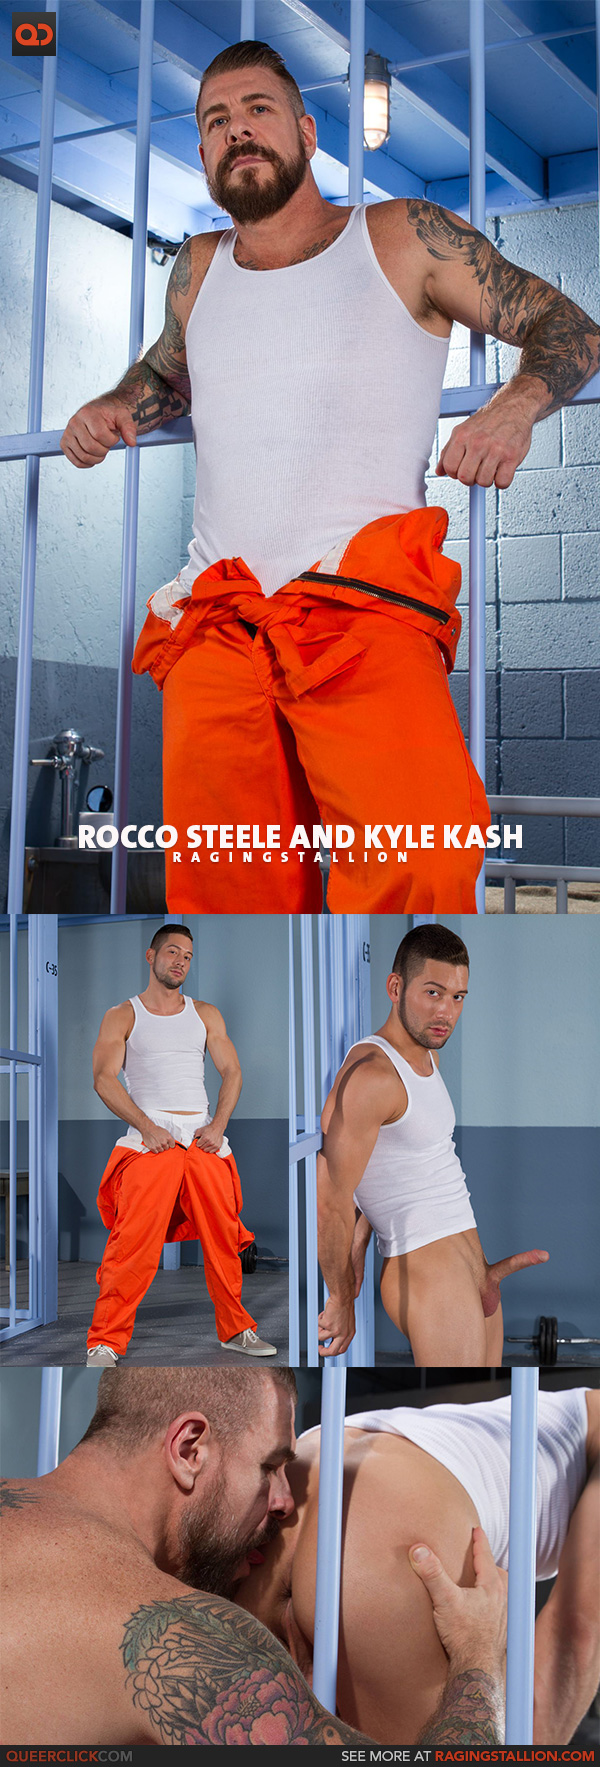 Raging Stallion: Rocco Steele and Kyle Kash